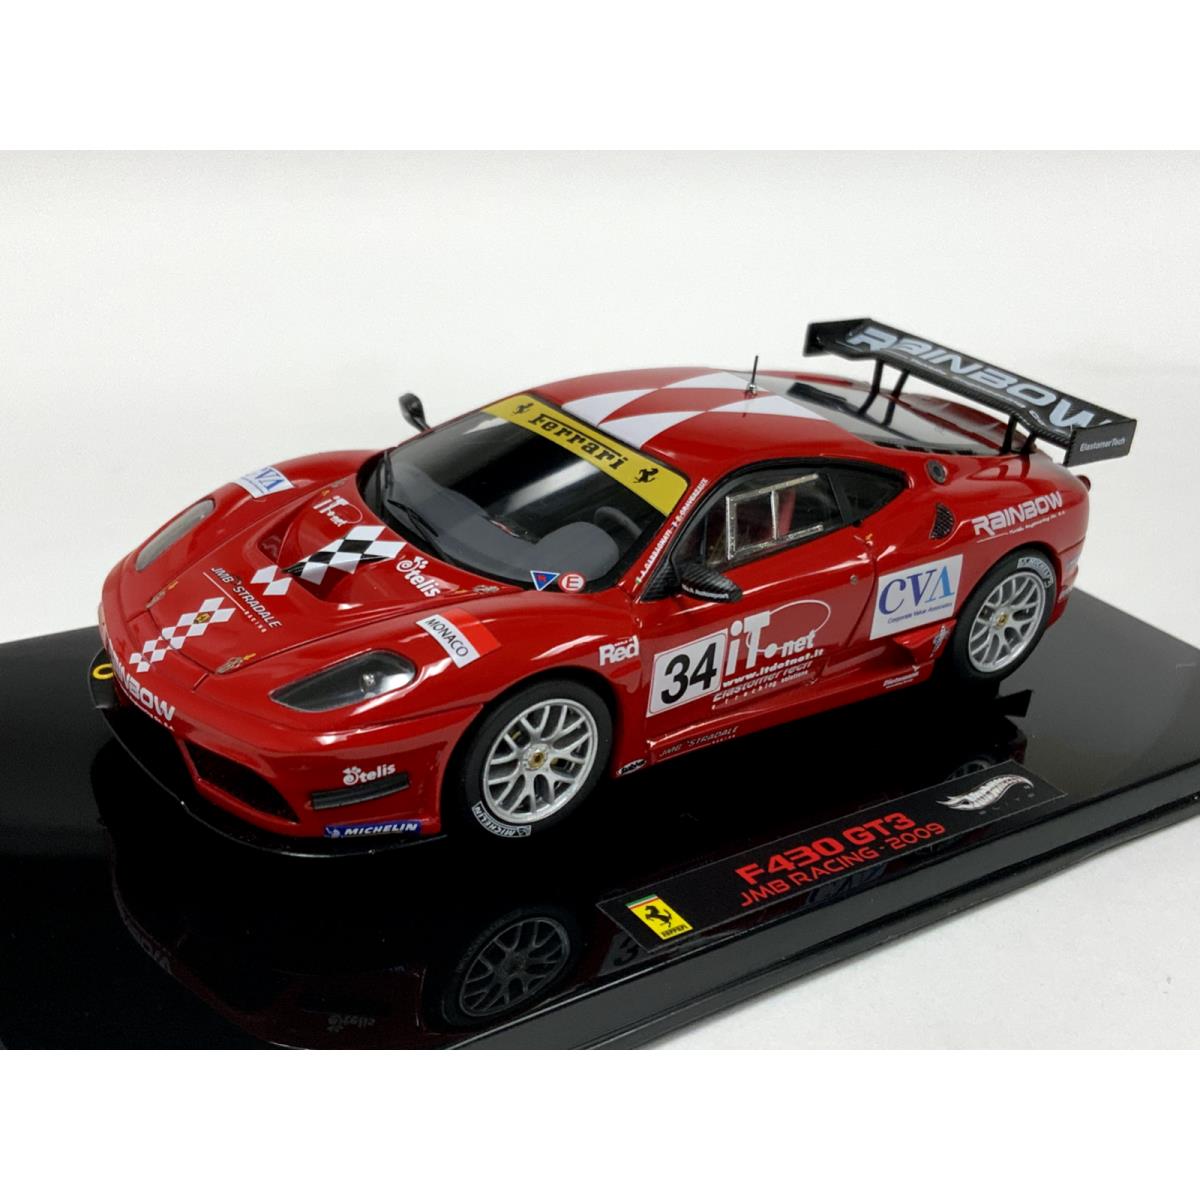 1/43 Hot Wheels Elite Ferrari 430 GT3 Jmb Racing From 2009 W1193 CF222